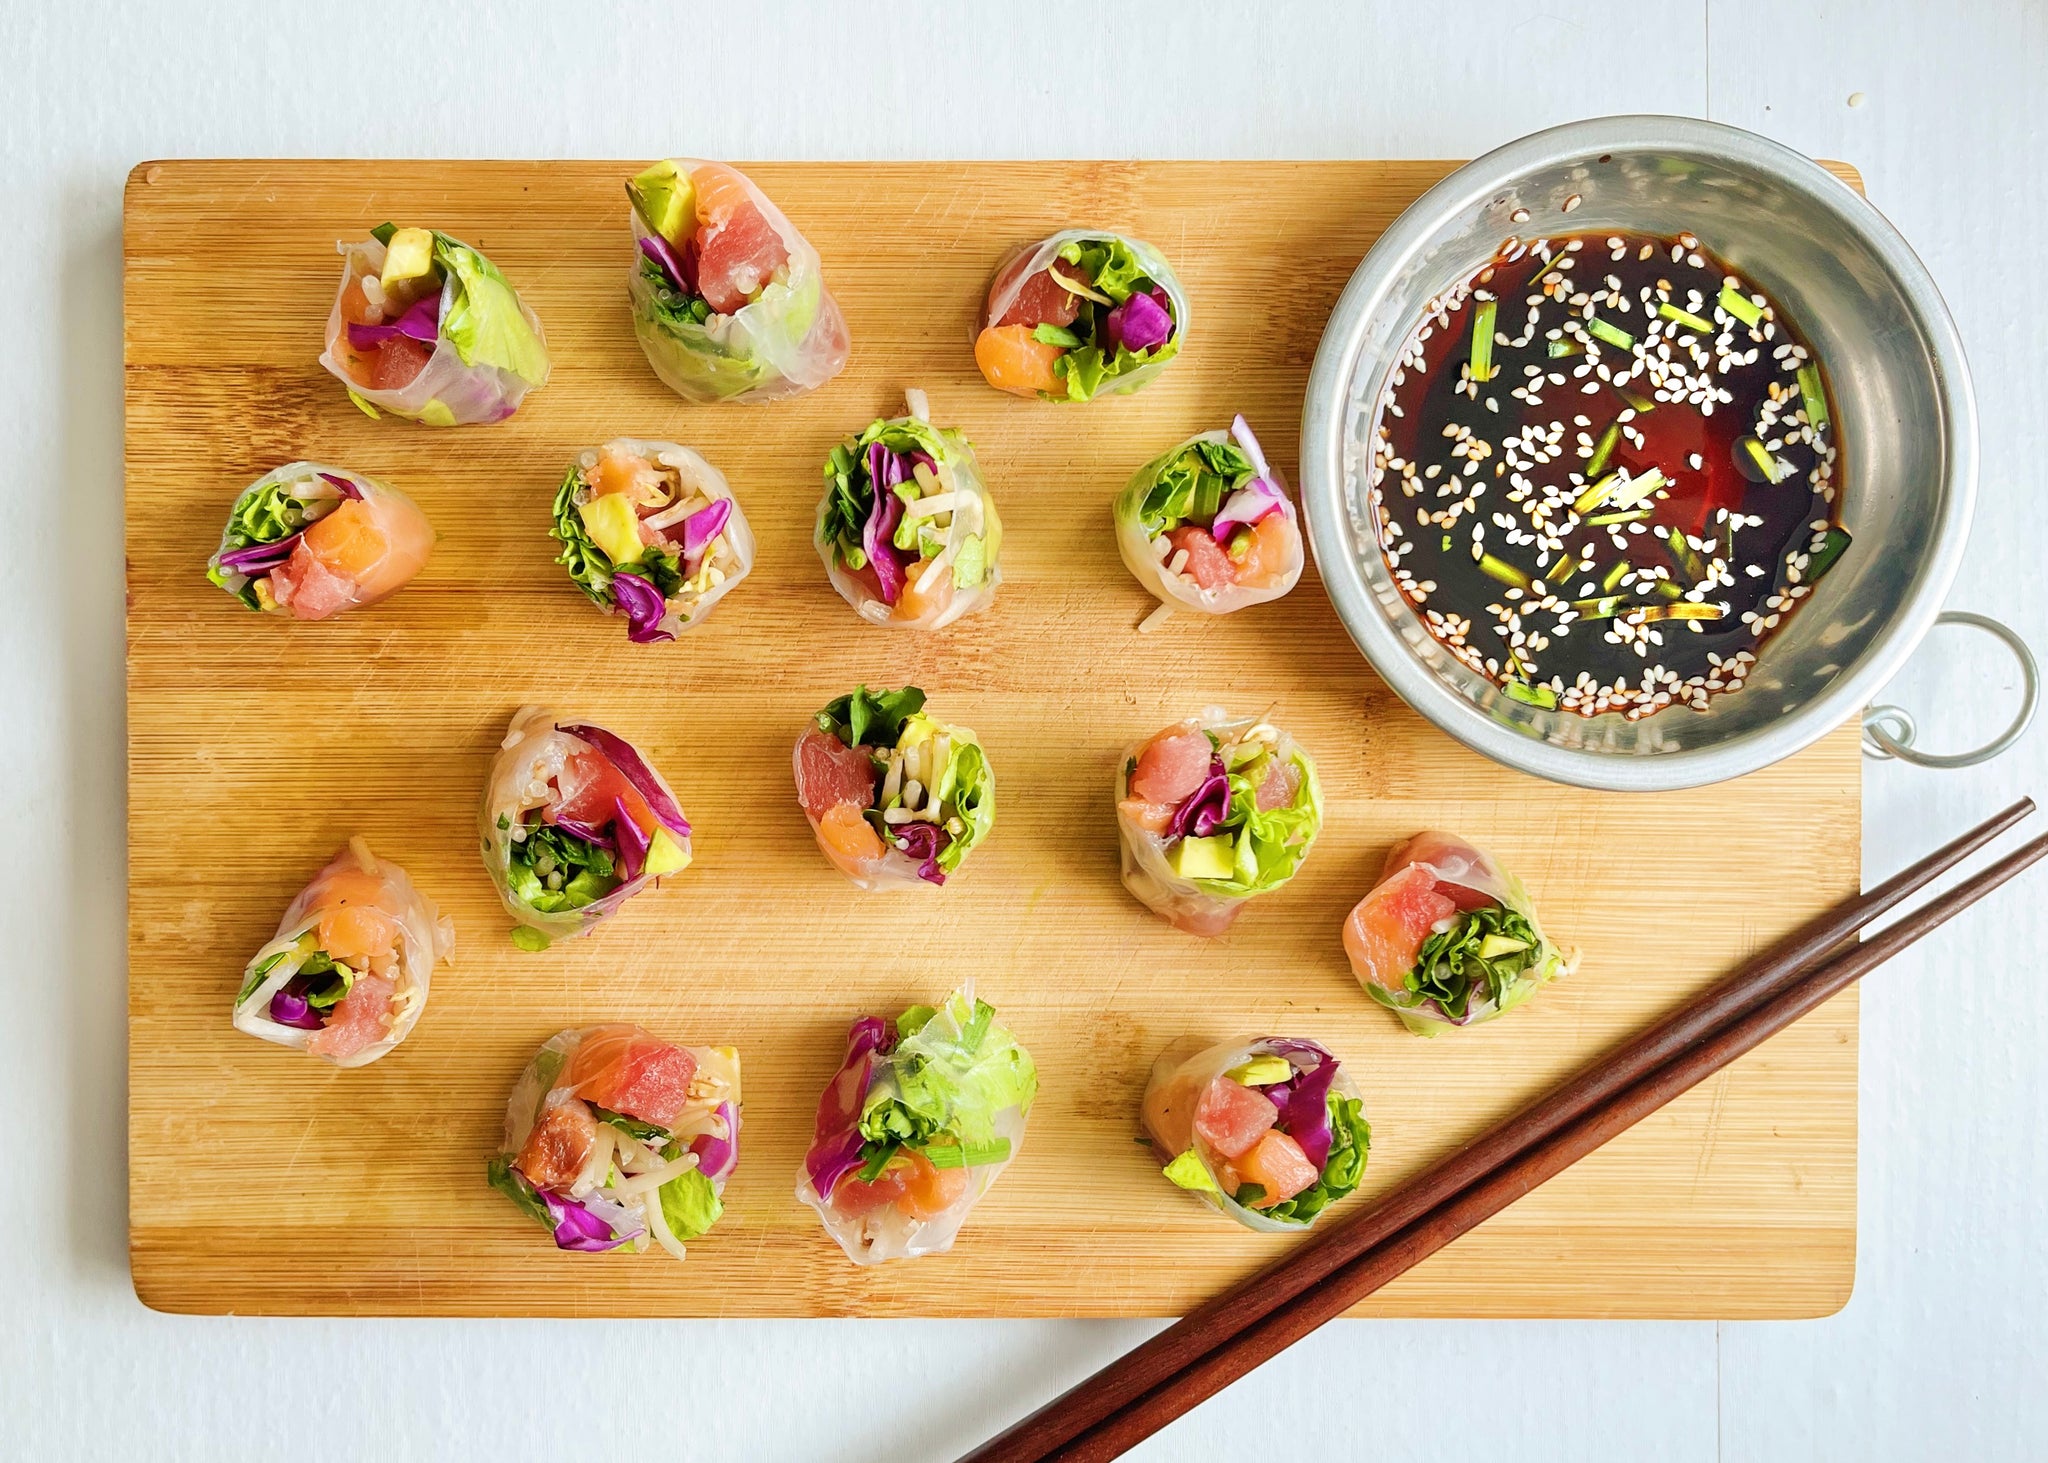 Tuna and Sashimi rolls with Japanese soy sauce